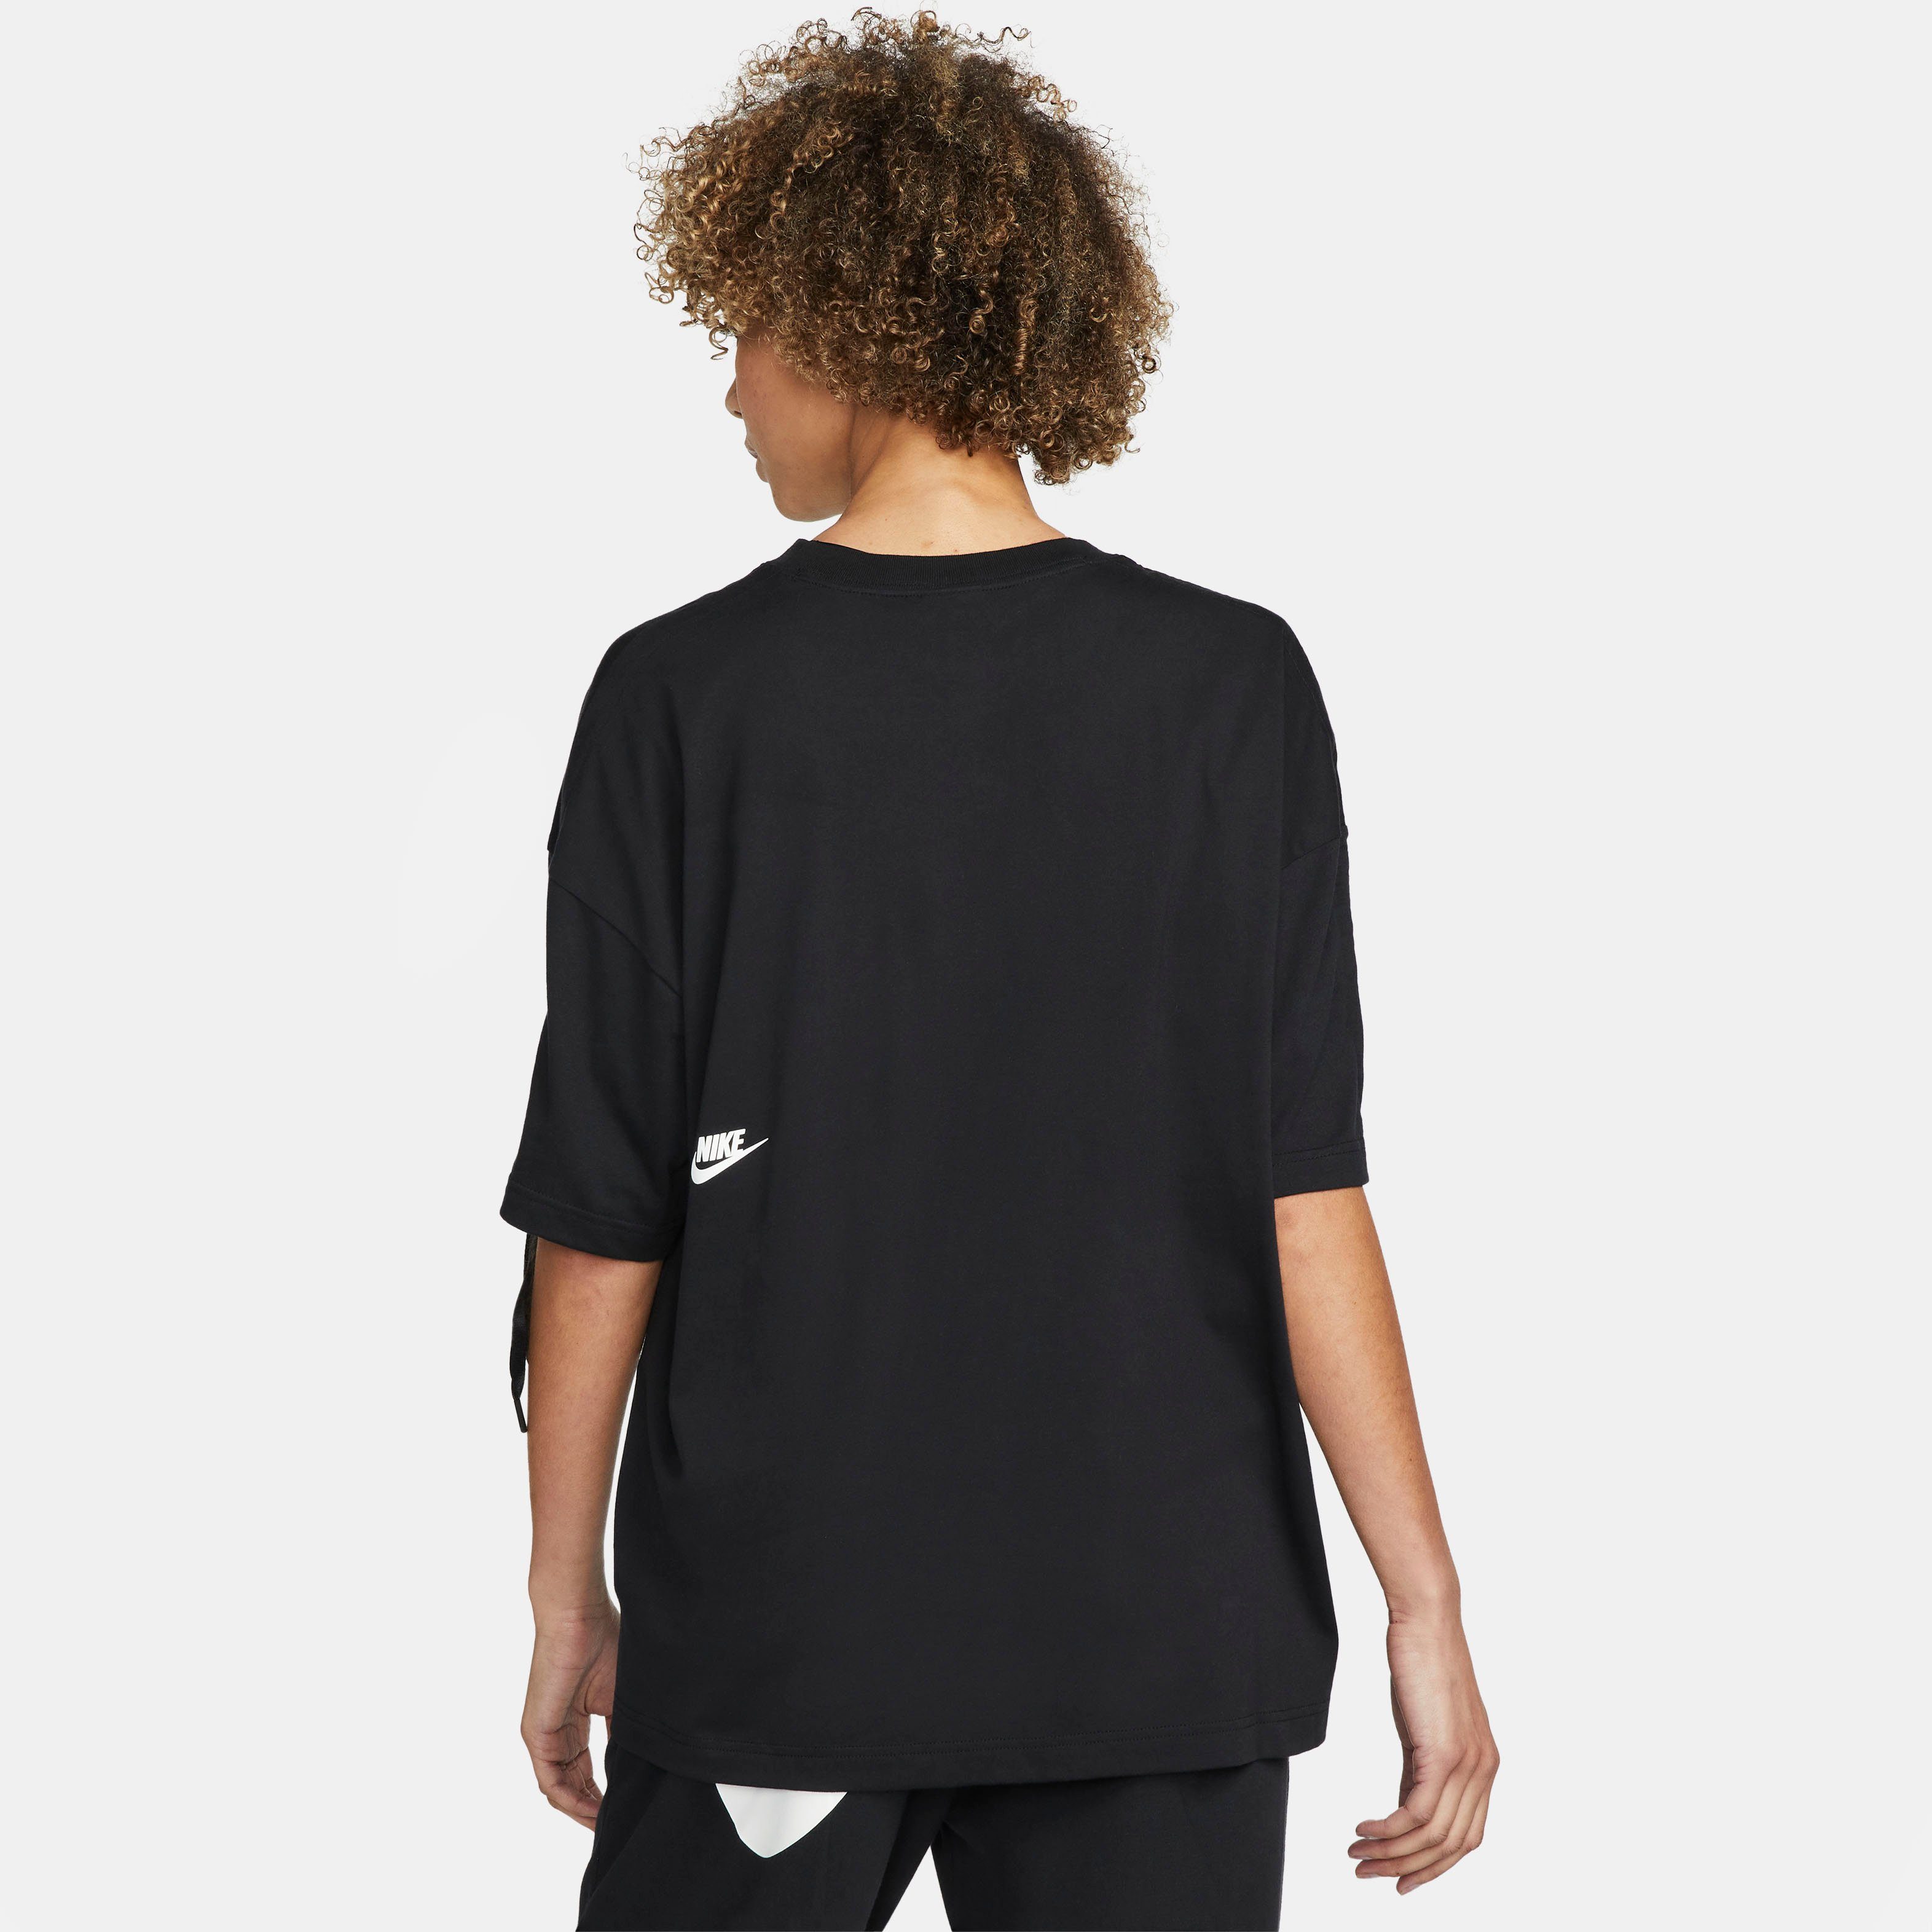 SS DNC T-Shirt BLACK TOP NSW Nike W Sportswear